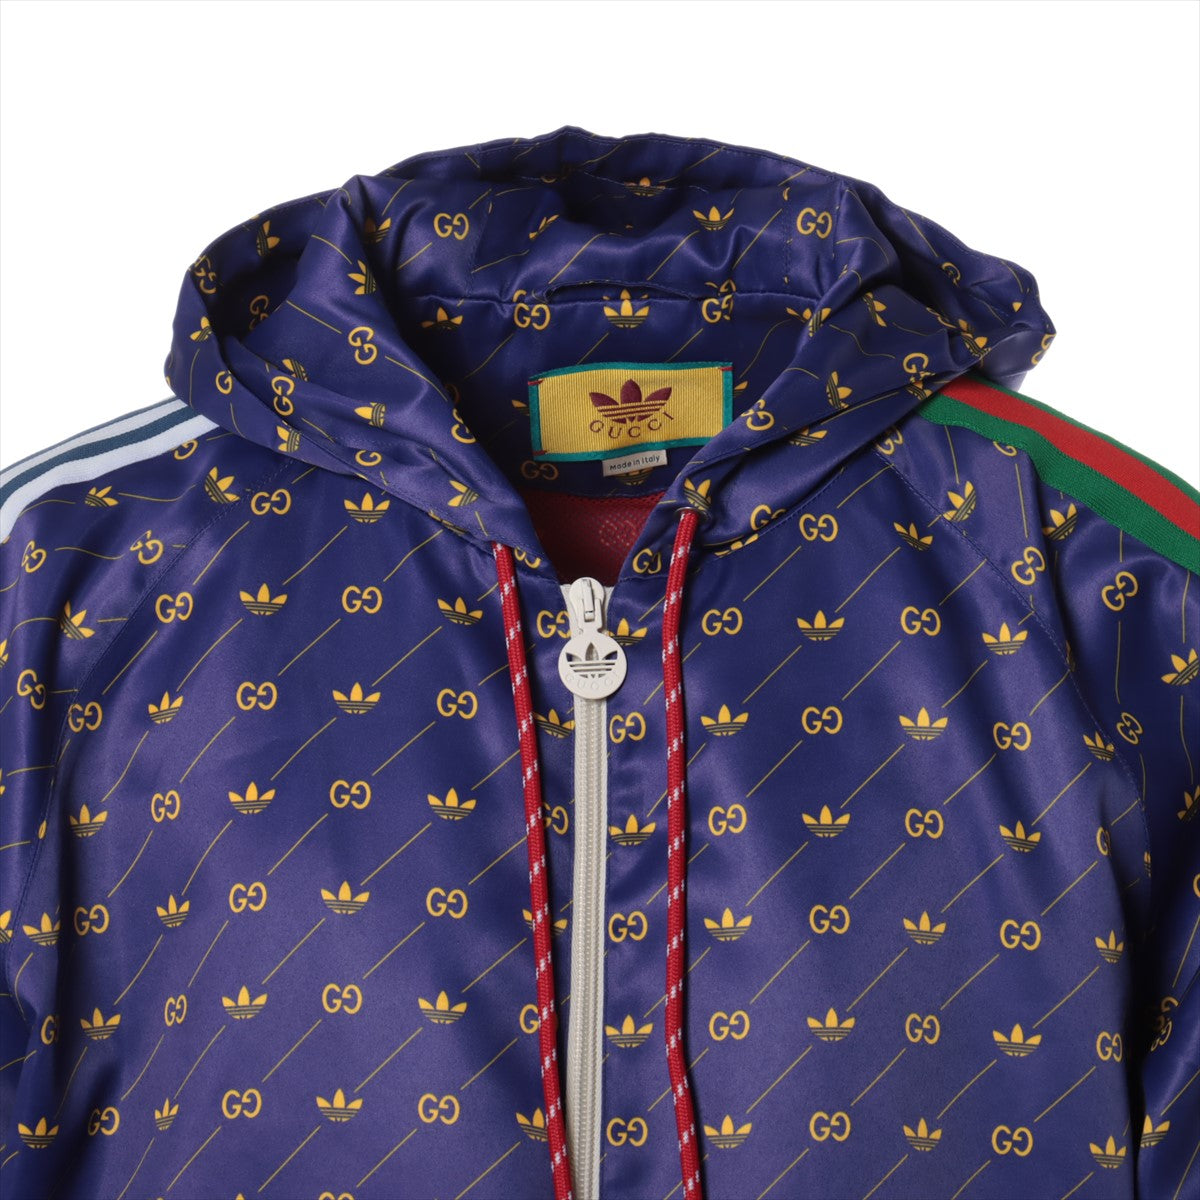 Gucci x adidas GG 22SS Polyester Jacket 48 Men's Purple  691428 Trefoil Print Jacket